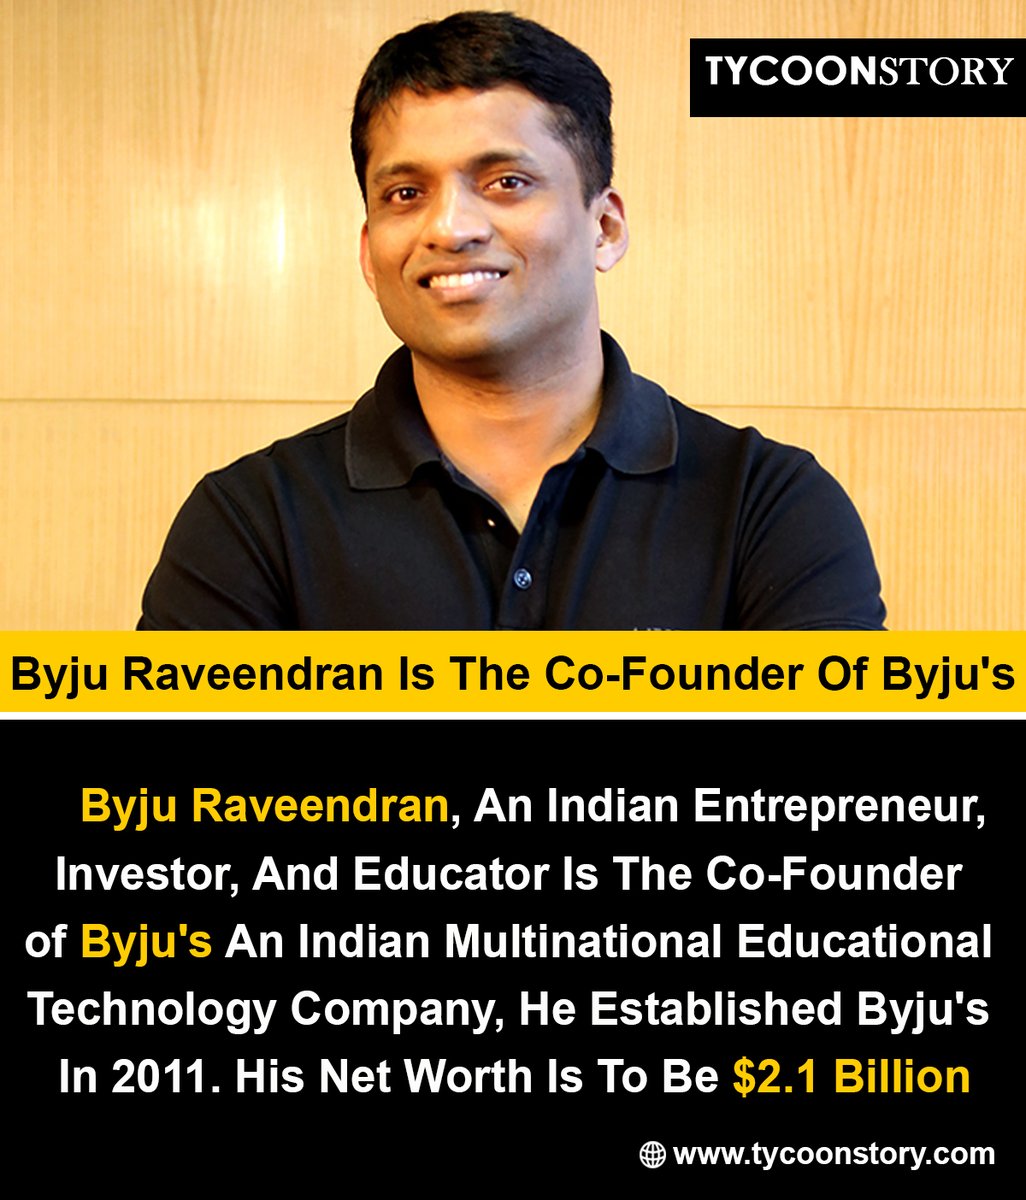 Byju Raveendran Is The Co-Founder Of Byju's #ByjuRaveendran #Byjus #EdTech #LearningRevolution #Education #StartupFounder #InnovativeLearning #TechInEducation #Entrepreneur #DigitalLearning #EducationTechnology tycoonstory.com